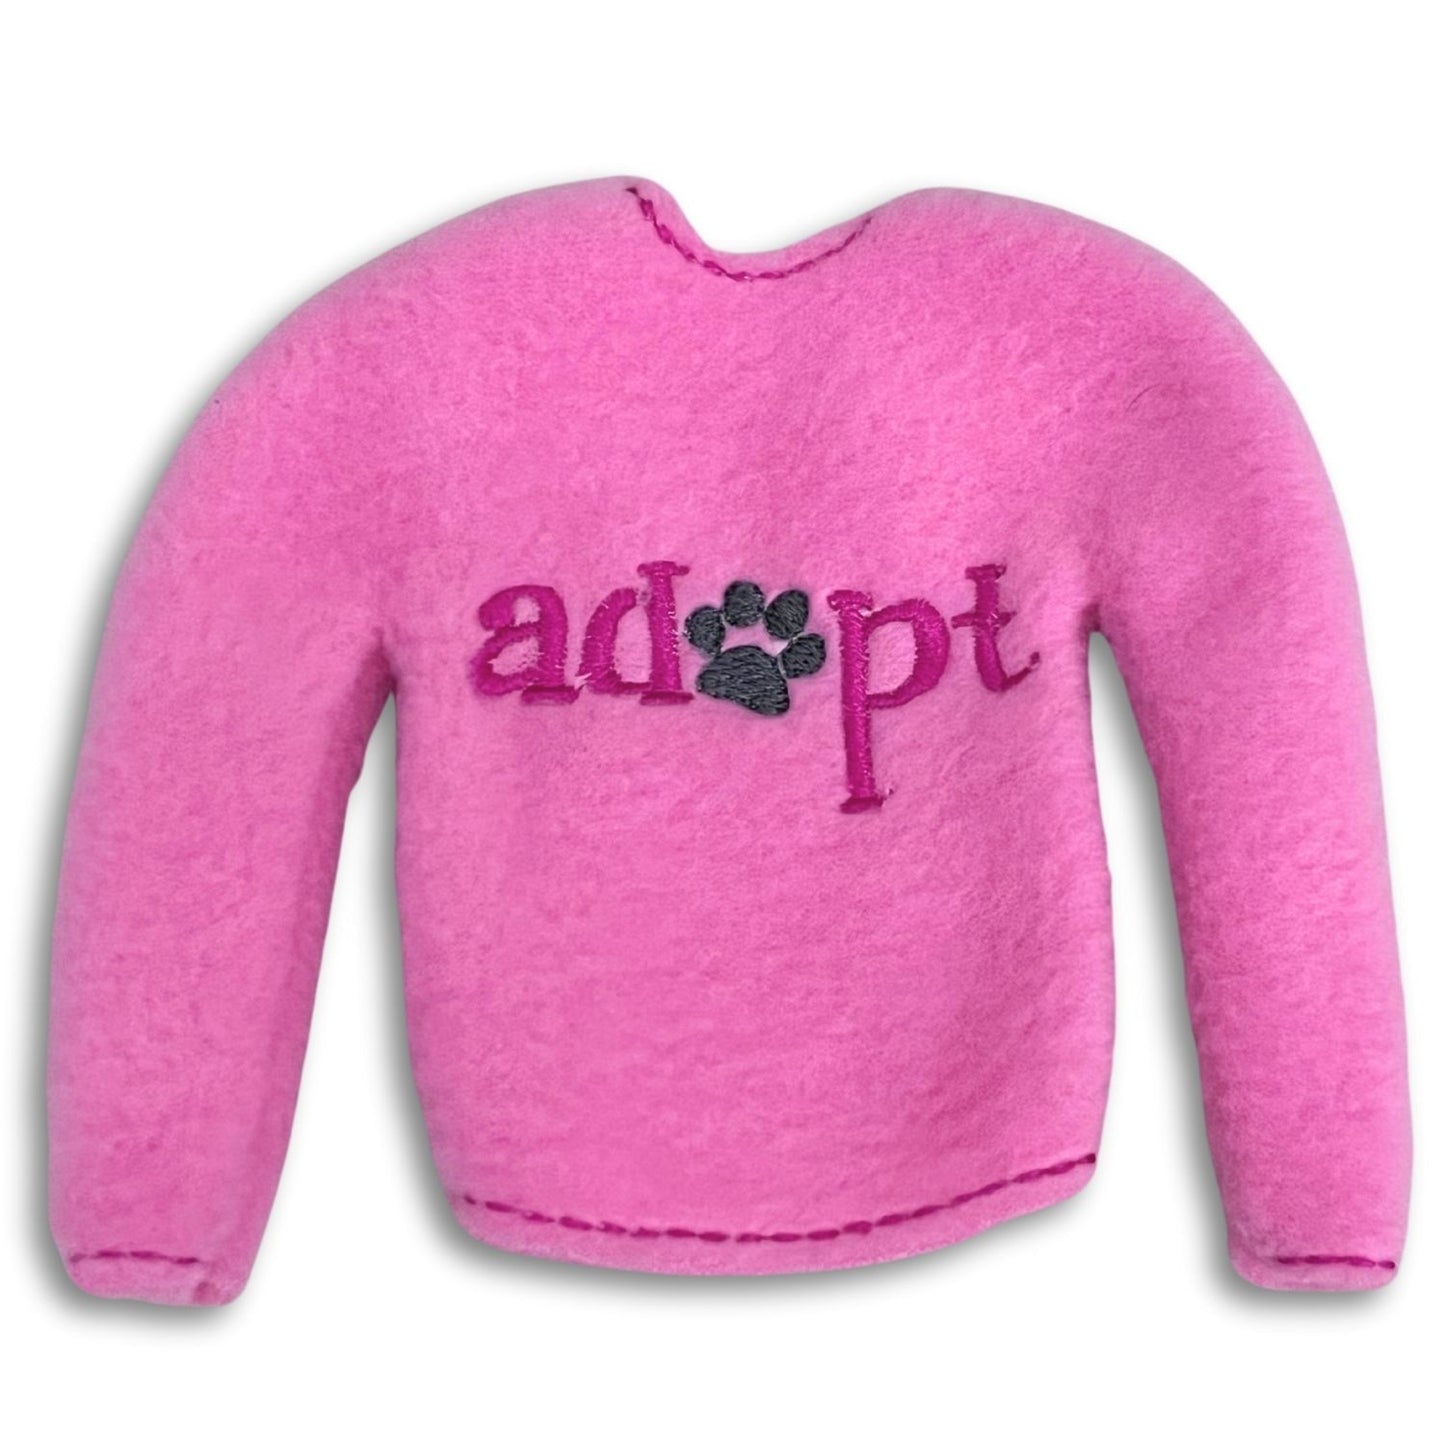 Elf Sweater Adopt Pink